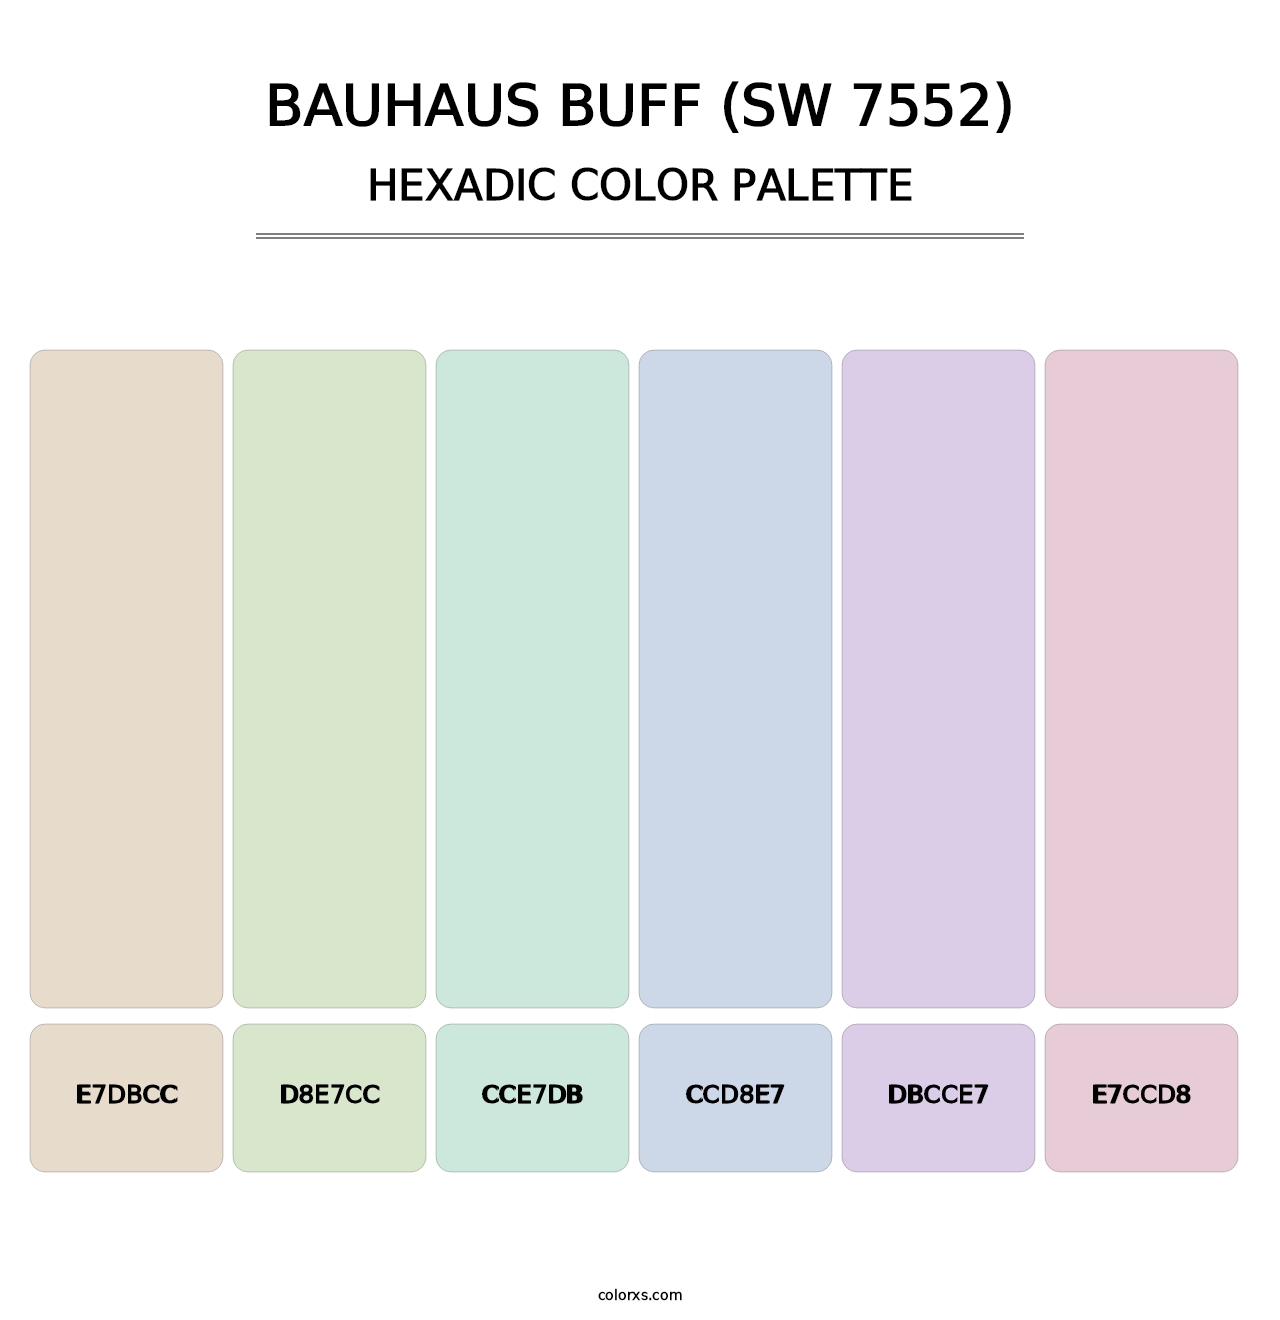 Bauhaus Buff (SW 7552) - Hexadic Color Palette